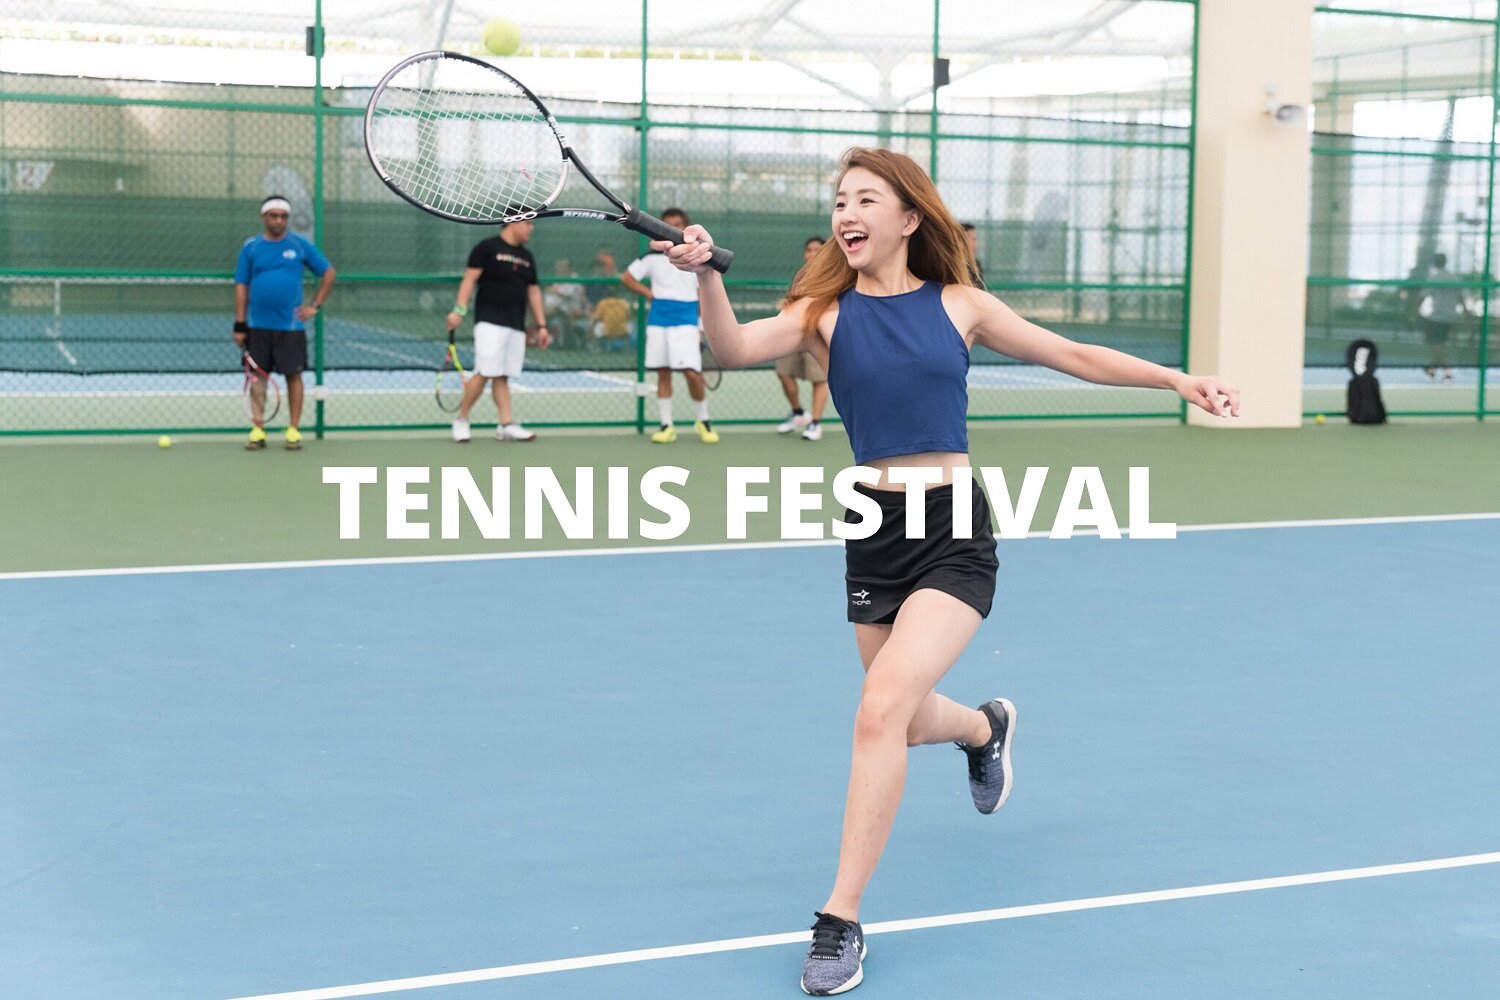 Tennis Festival